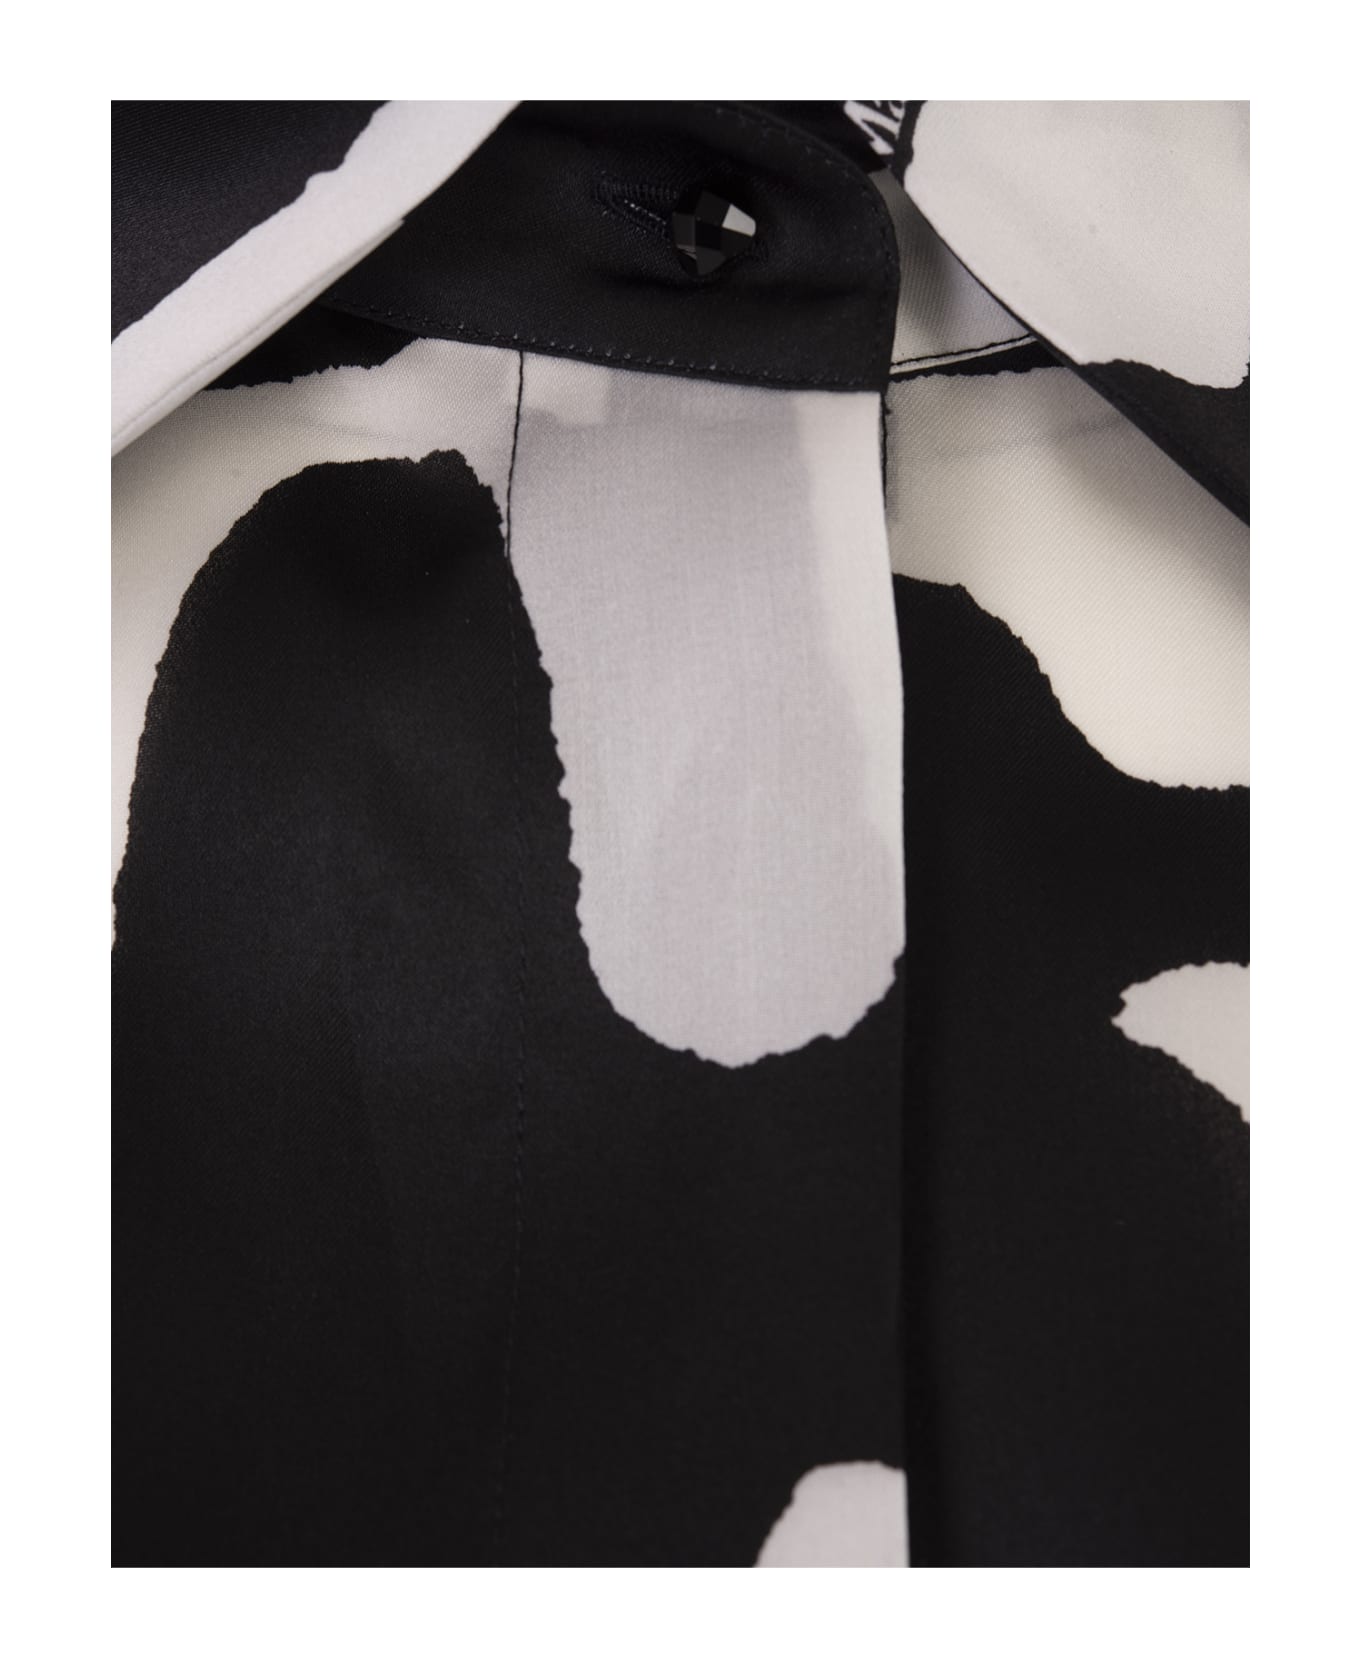 Max Mara Carella Shirt In White And Black - St. Grafica